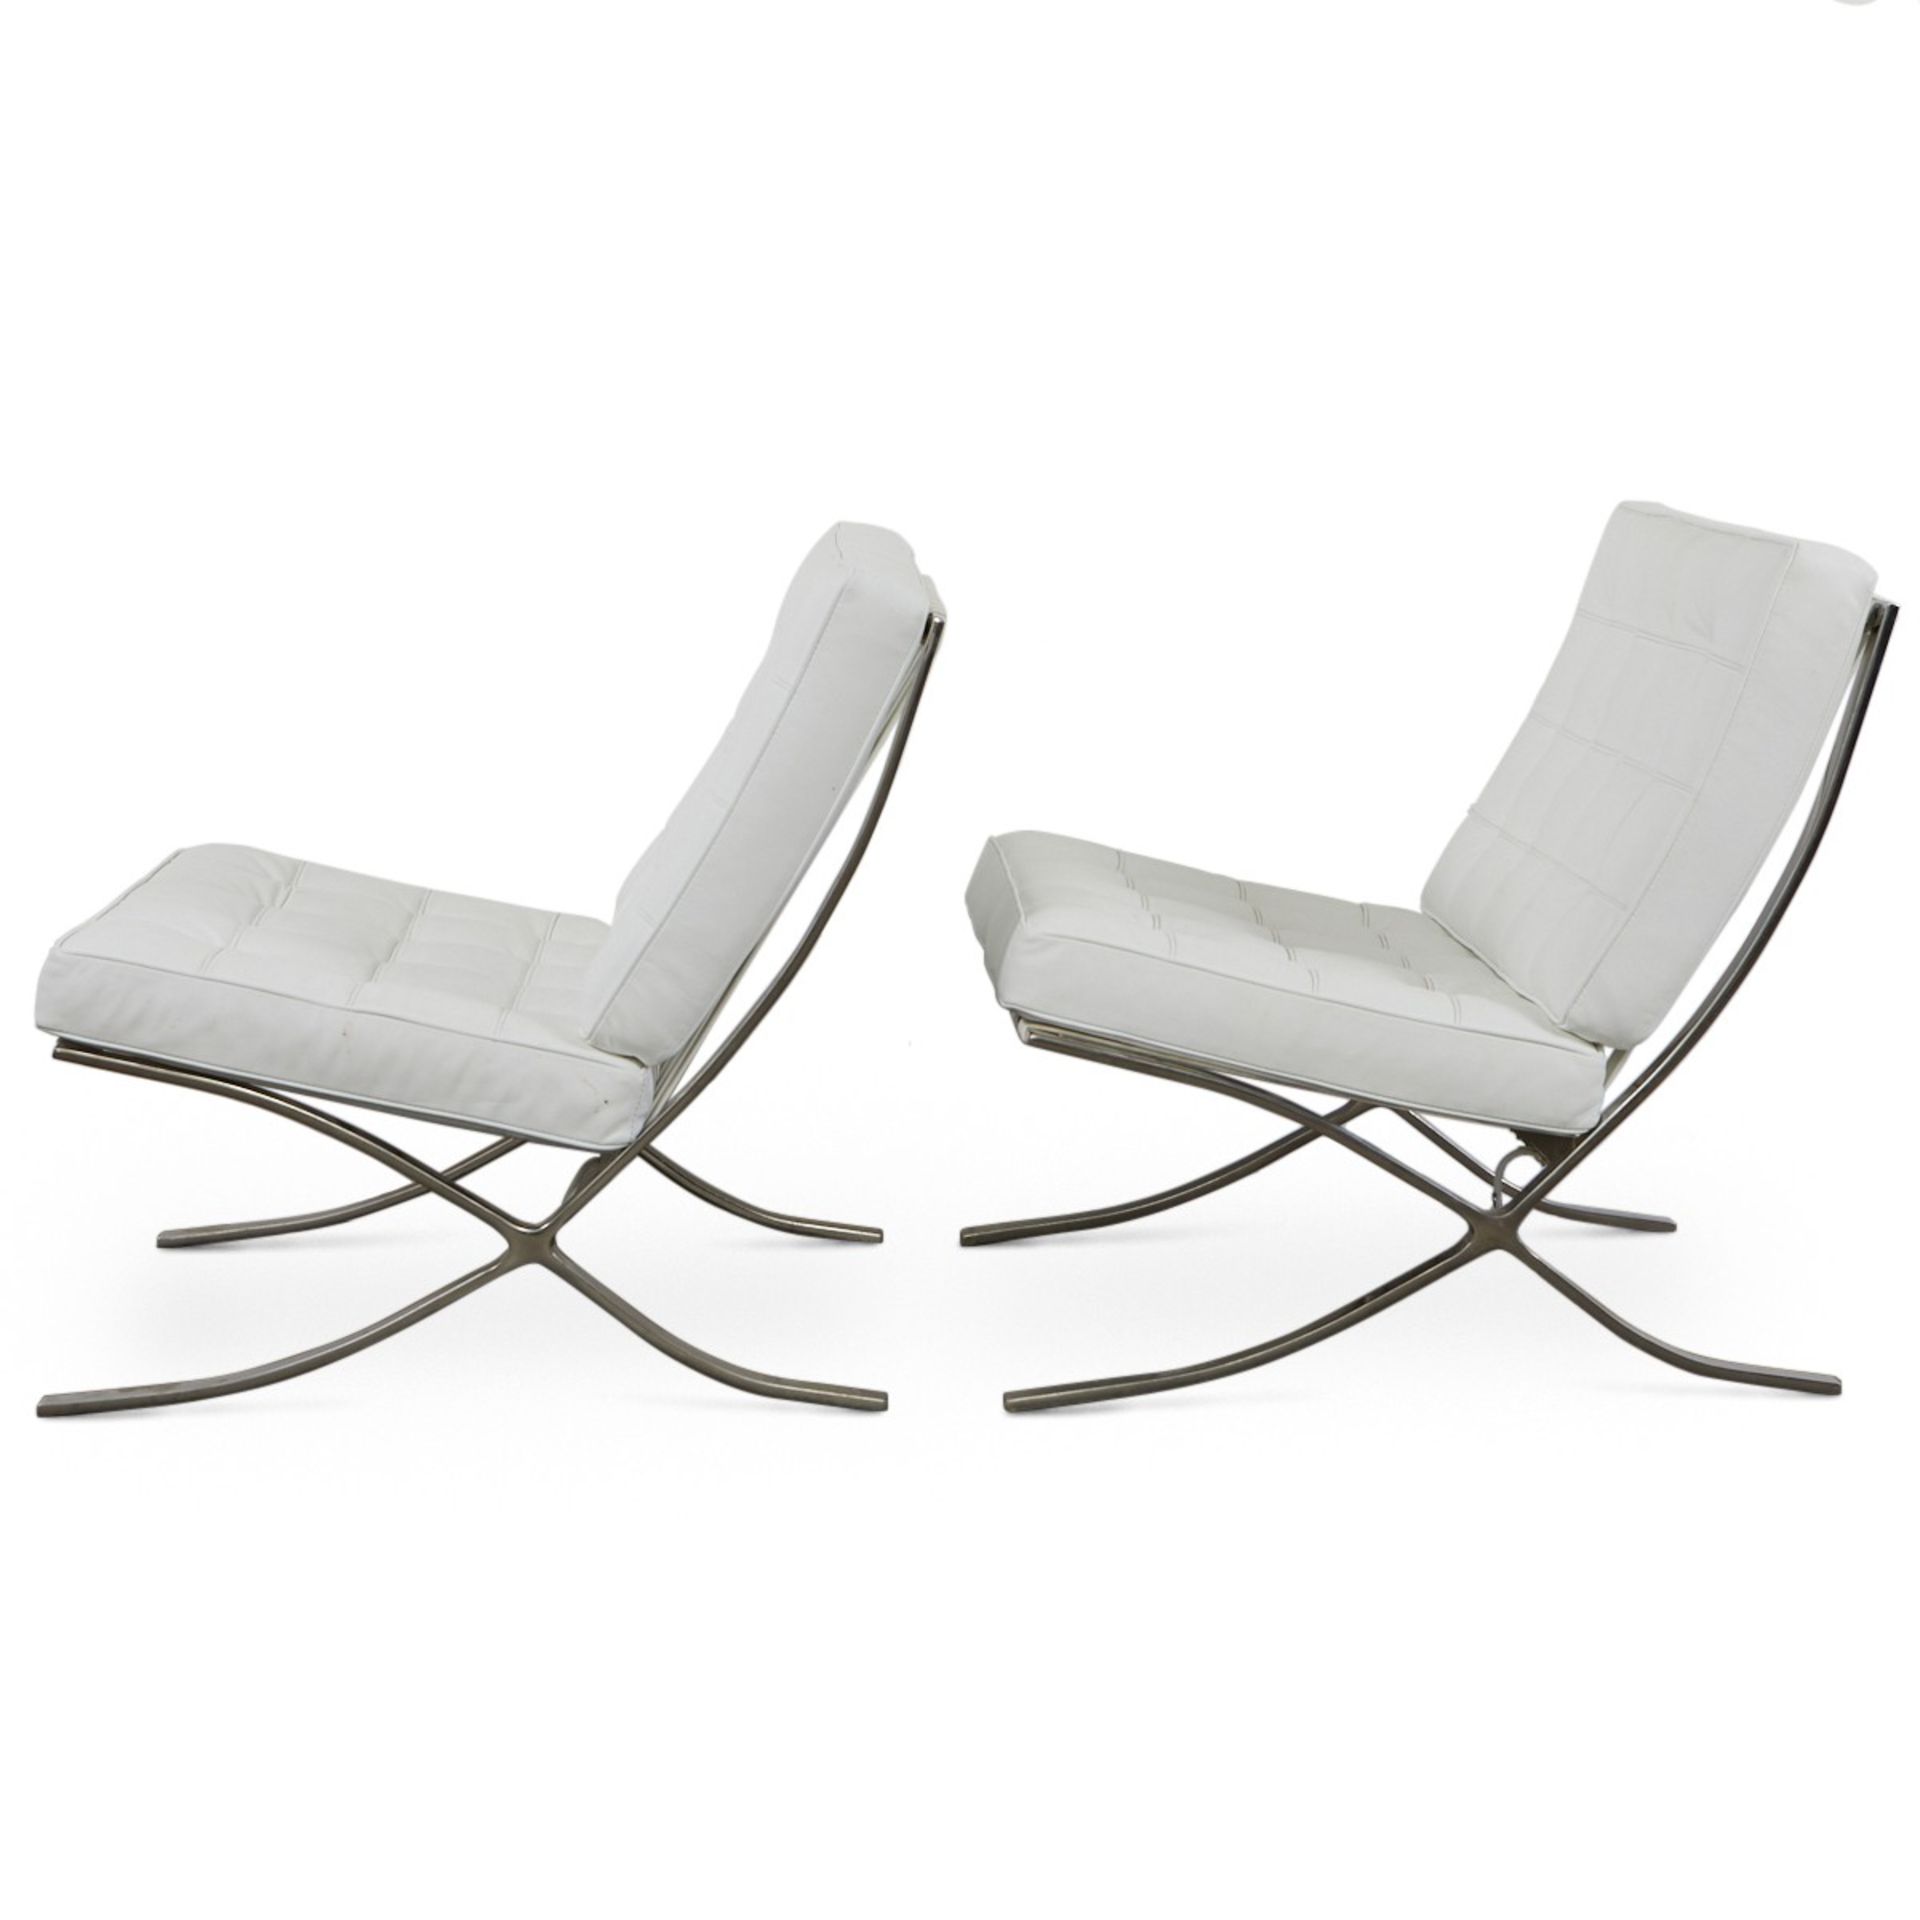 Pr: 2 Mies van der Rohe Style Chairs Modern Classics - Bild 3 aus 7